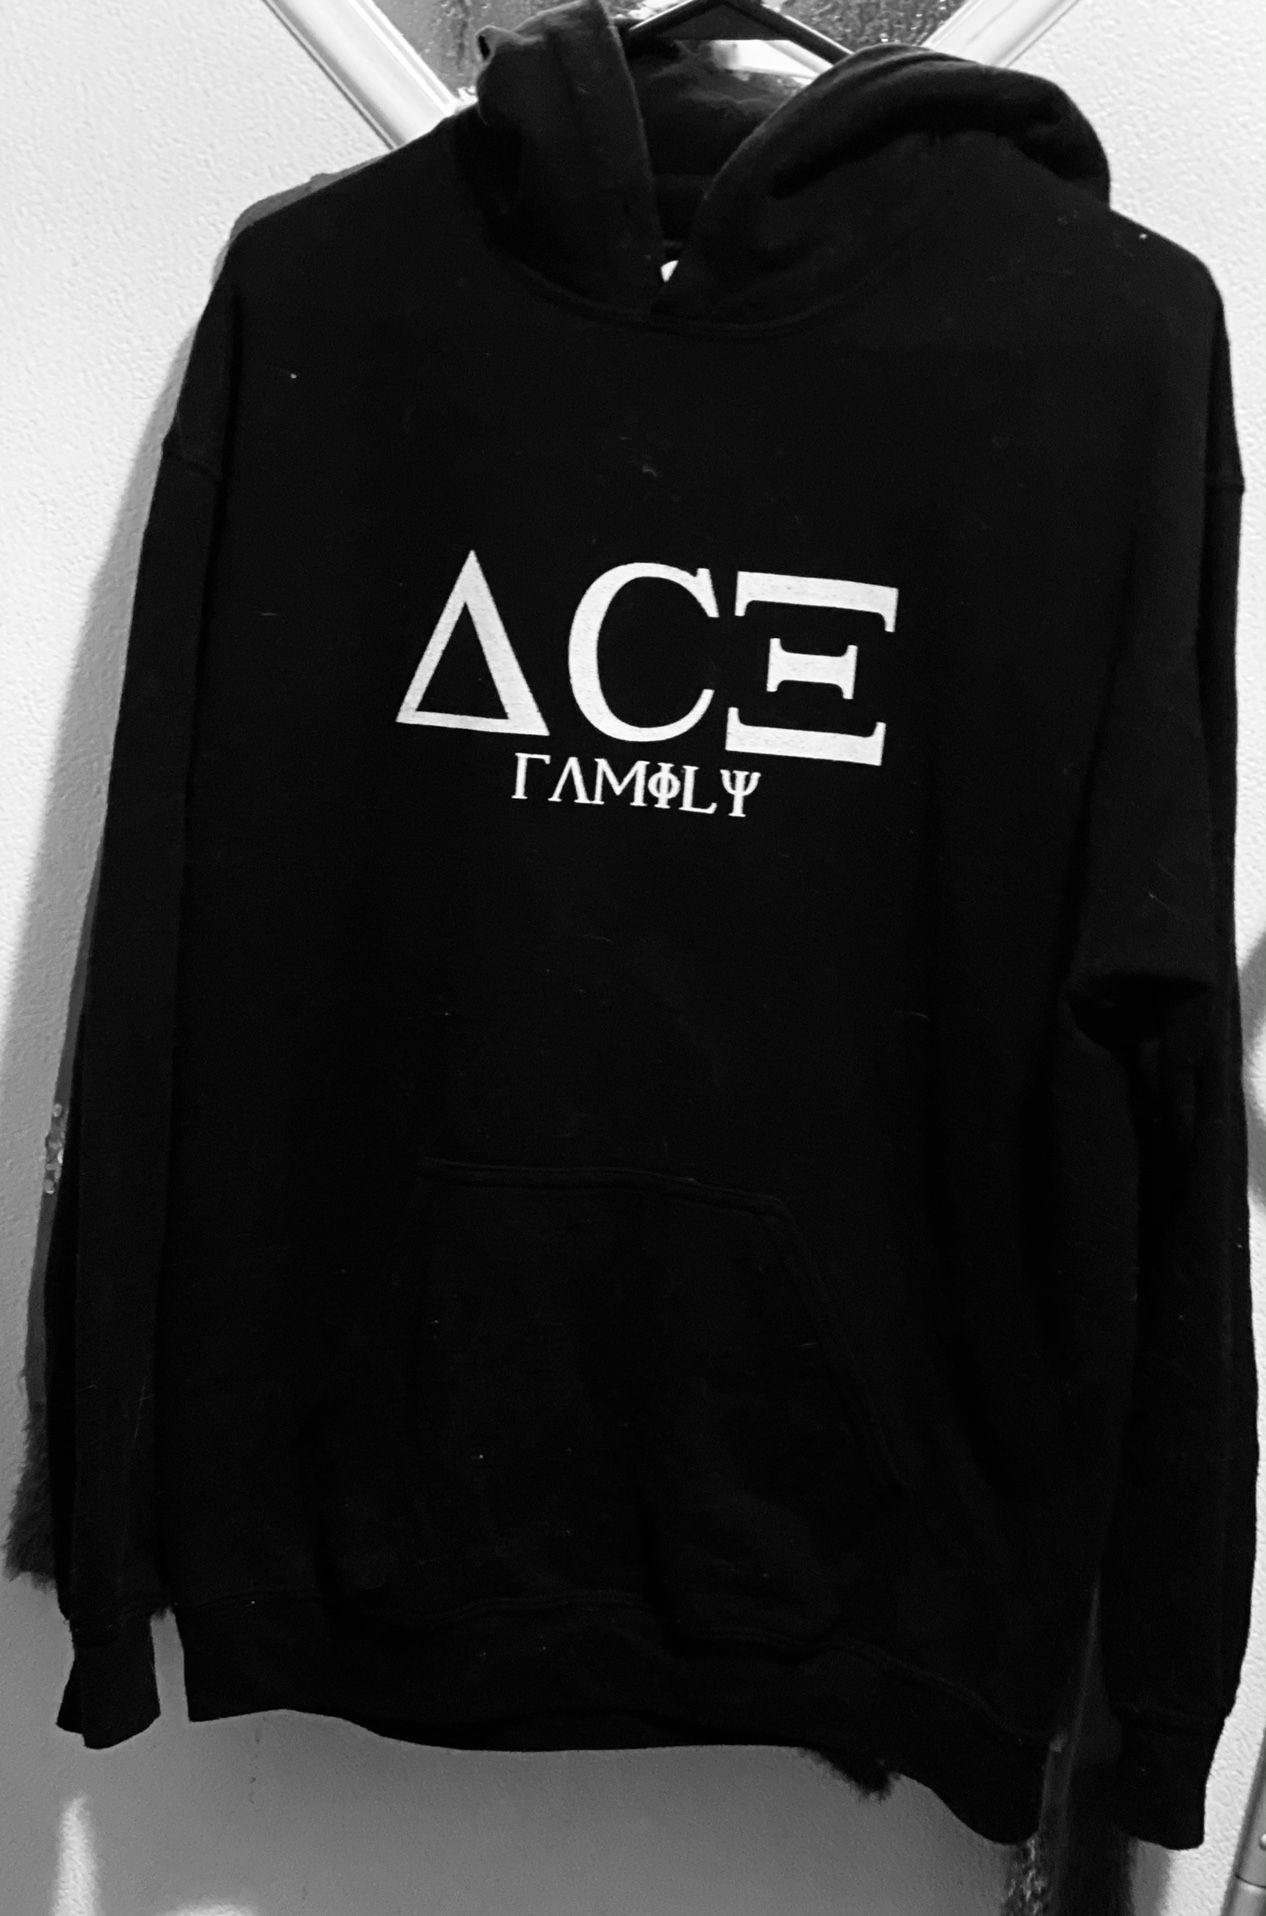 Ace Family Sweatshirt